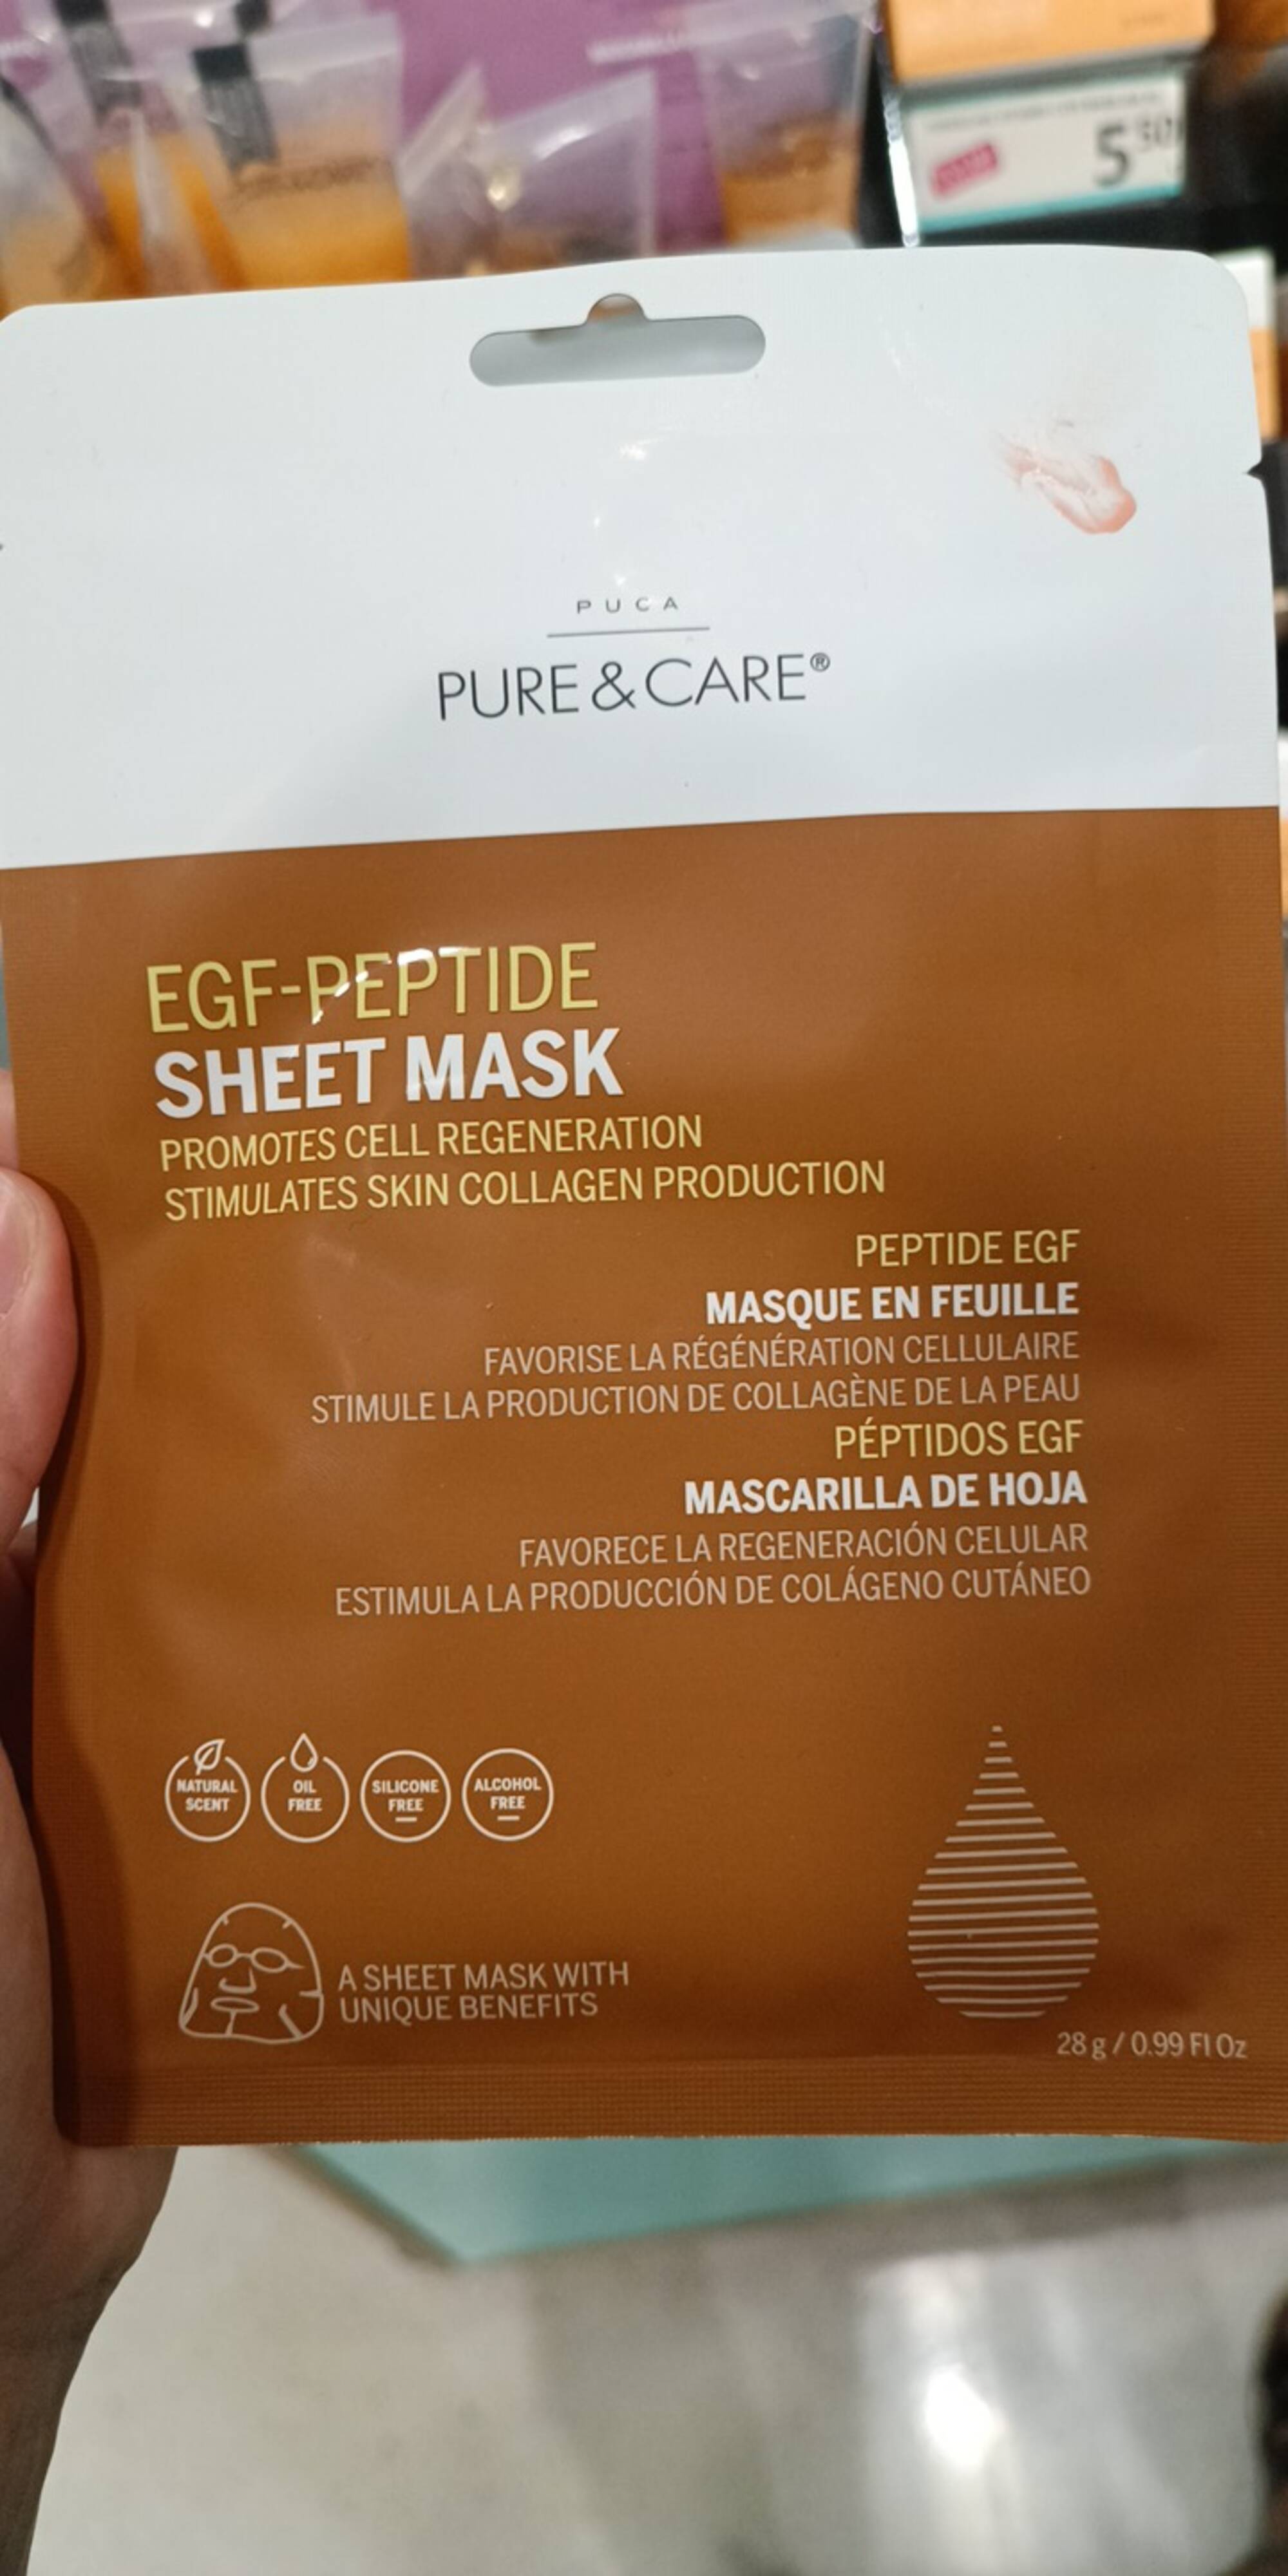 PURE & CARE - Masque en feuille peptide EGF